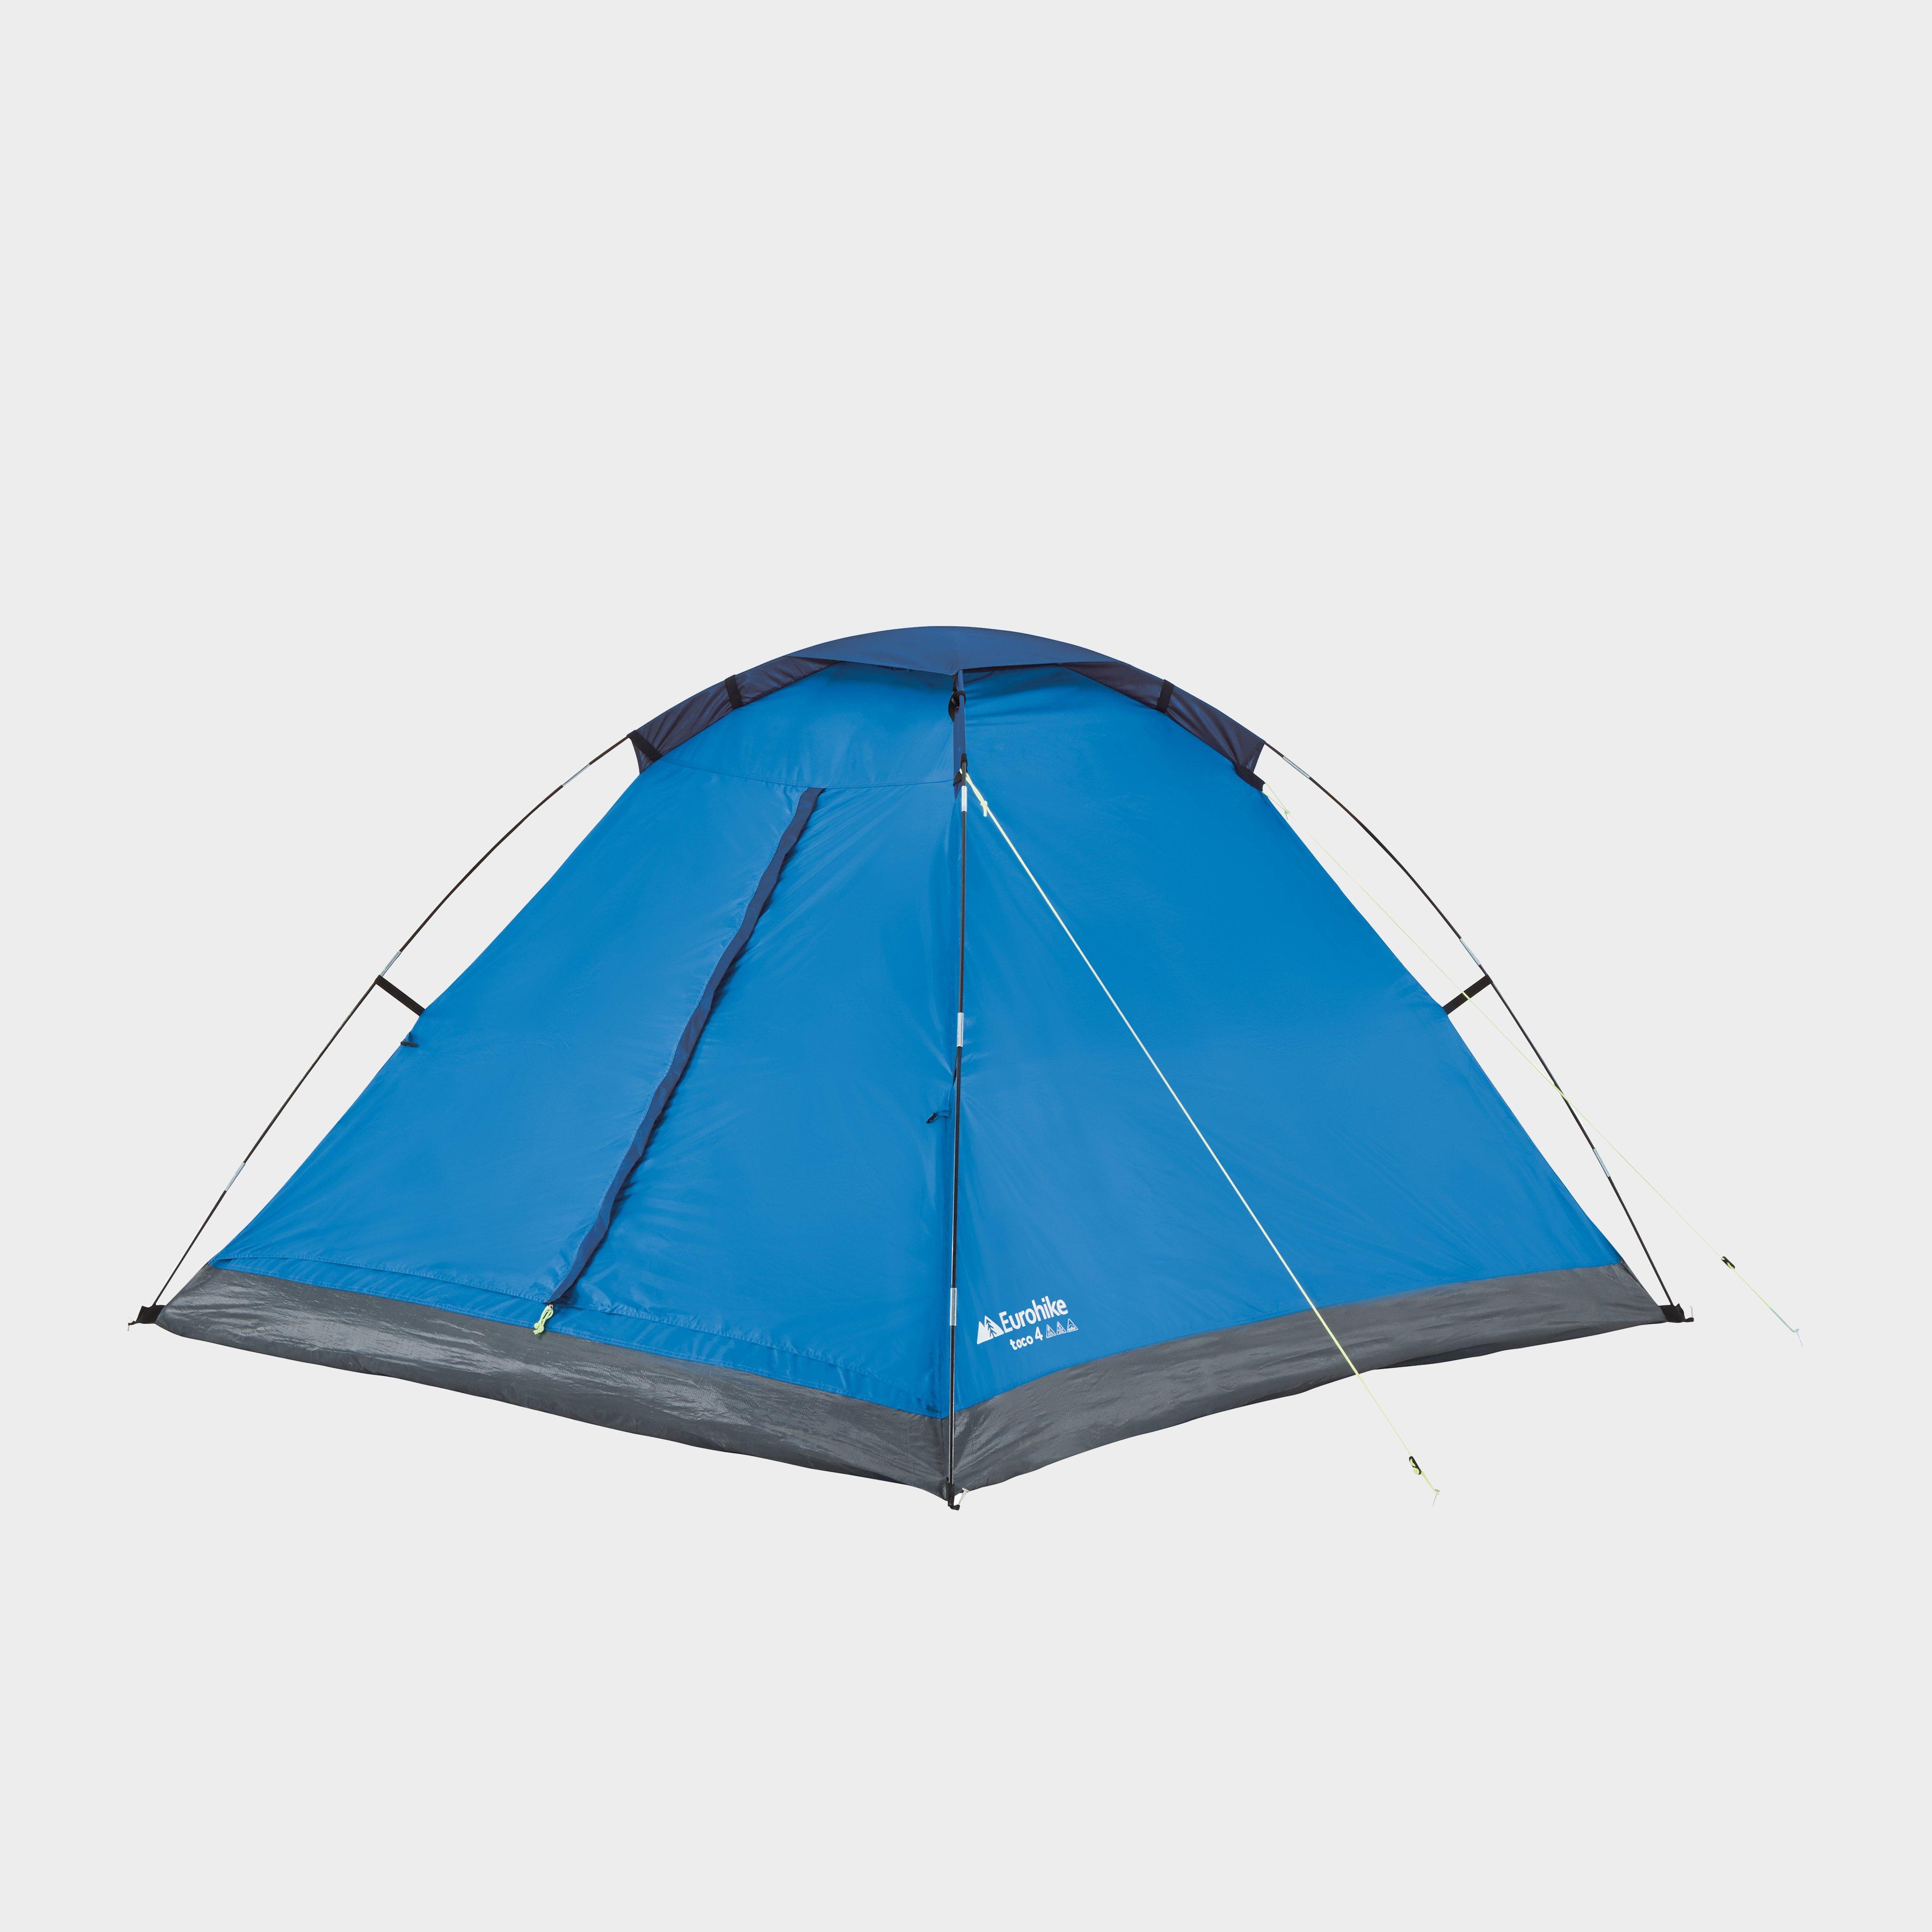 Eurohike Tamar 3 Man Tent - Blue/blue  Blue/blue